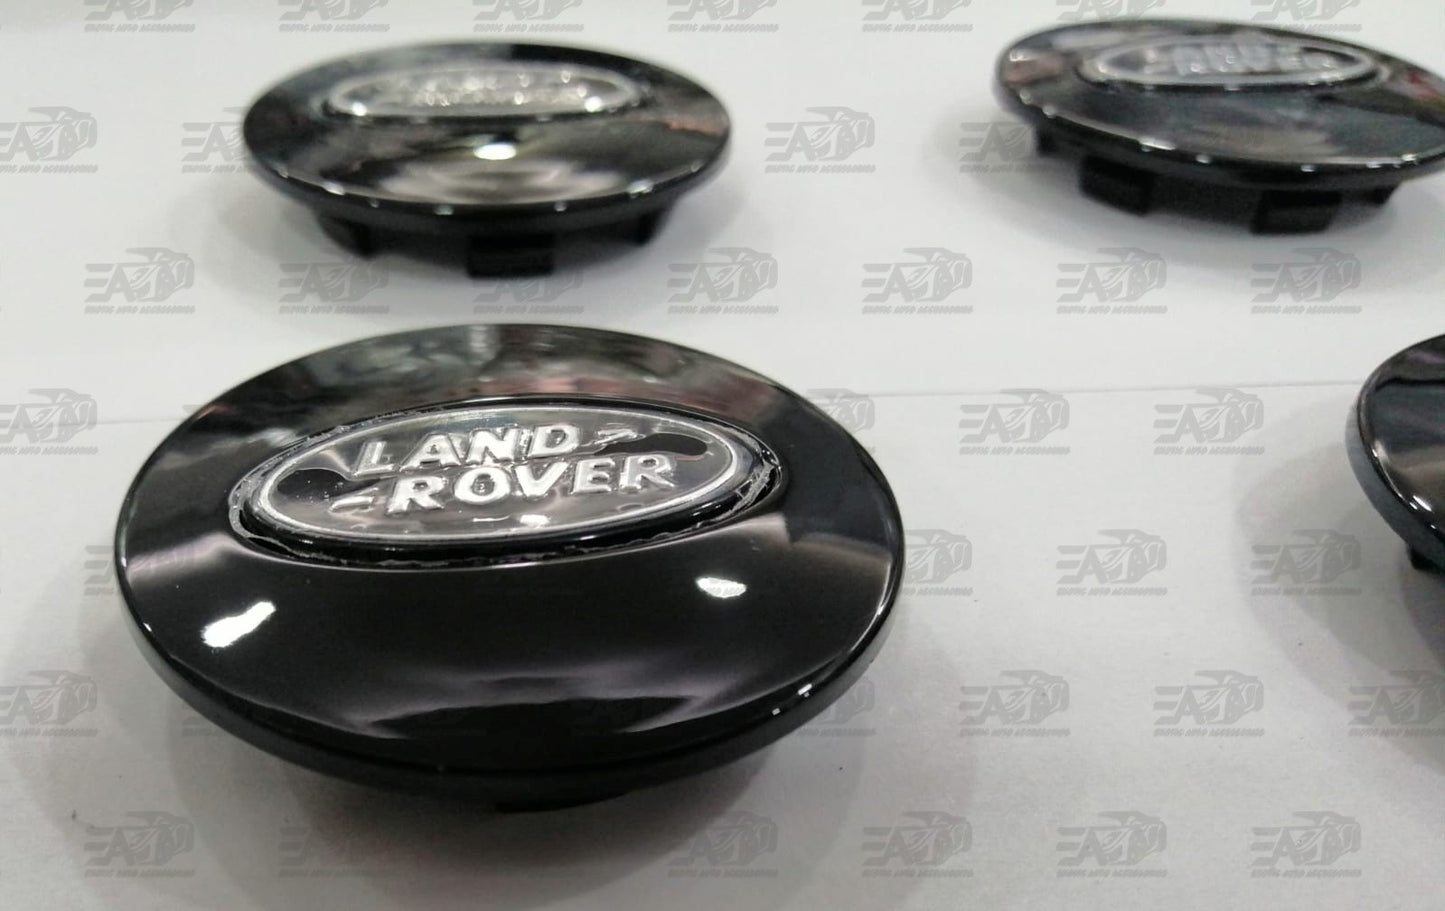 Land Rover black center caps set 63mm